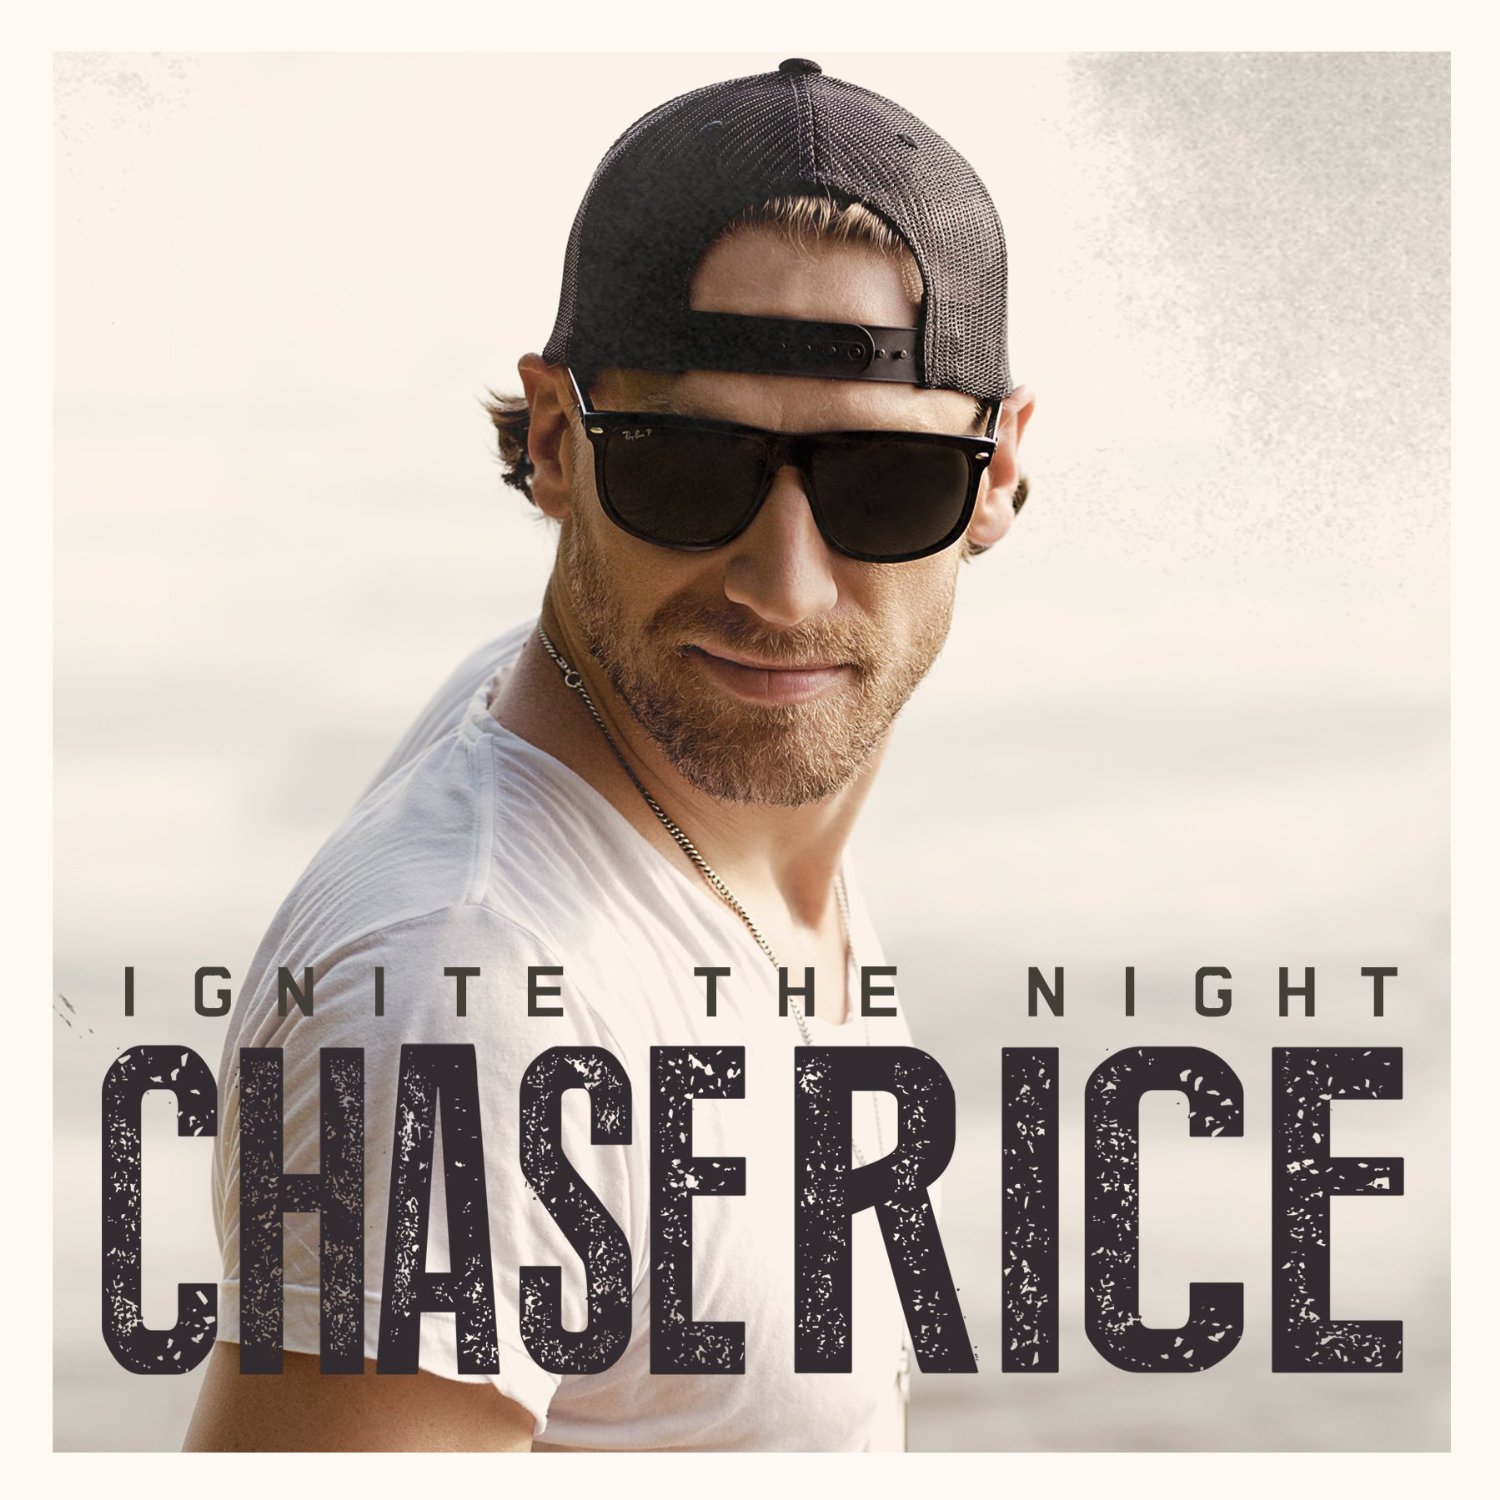 chase rice ignite the night